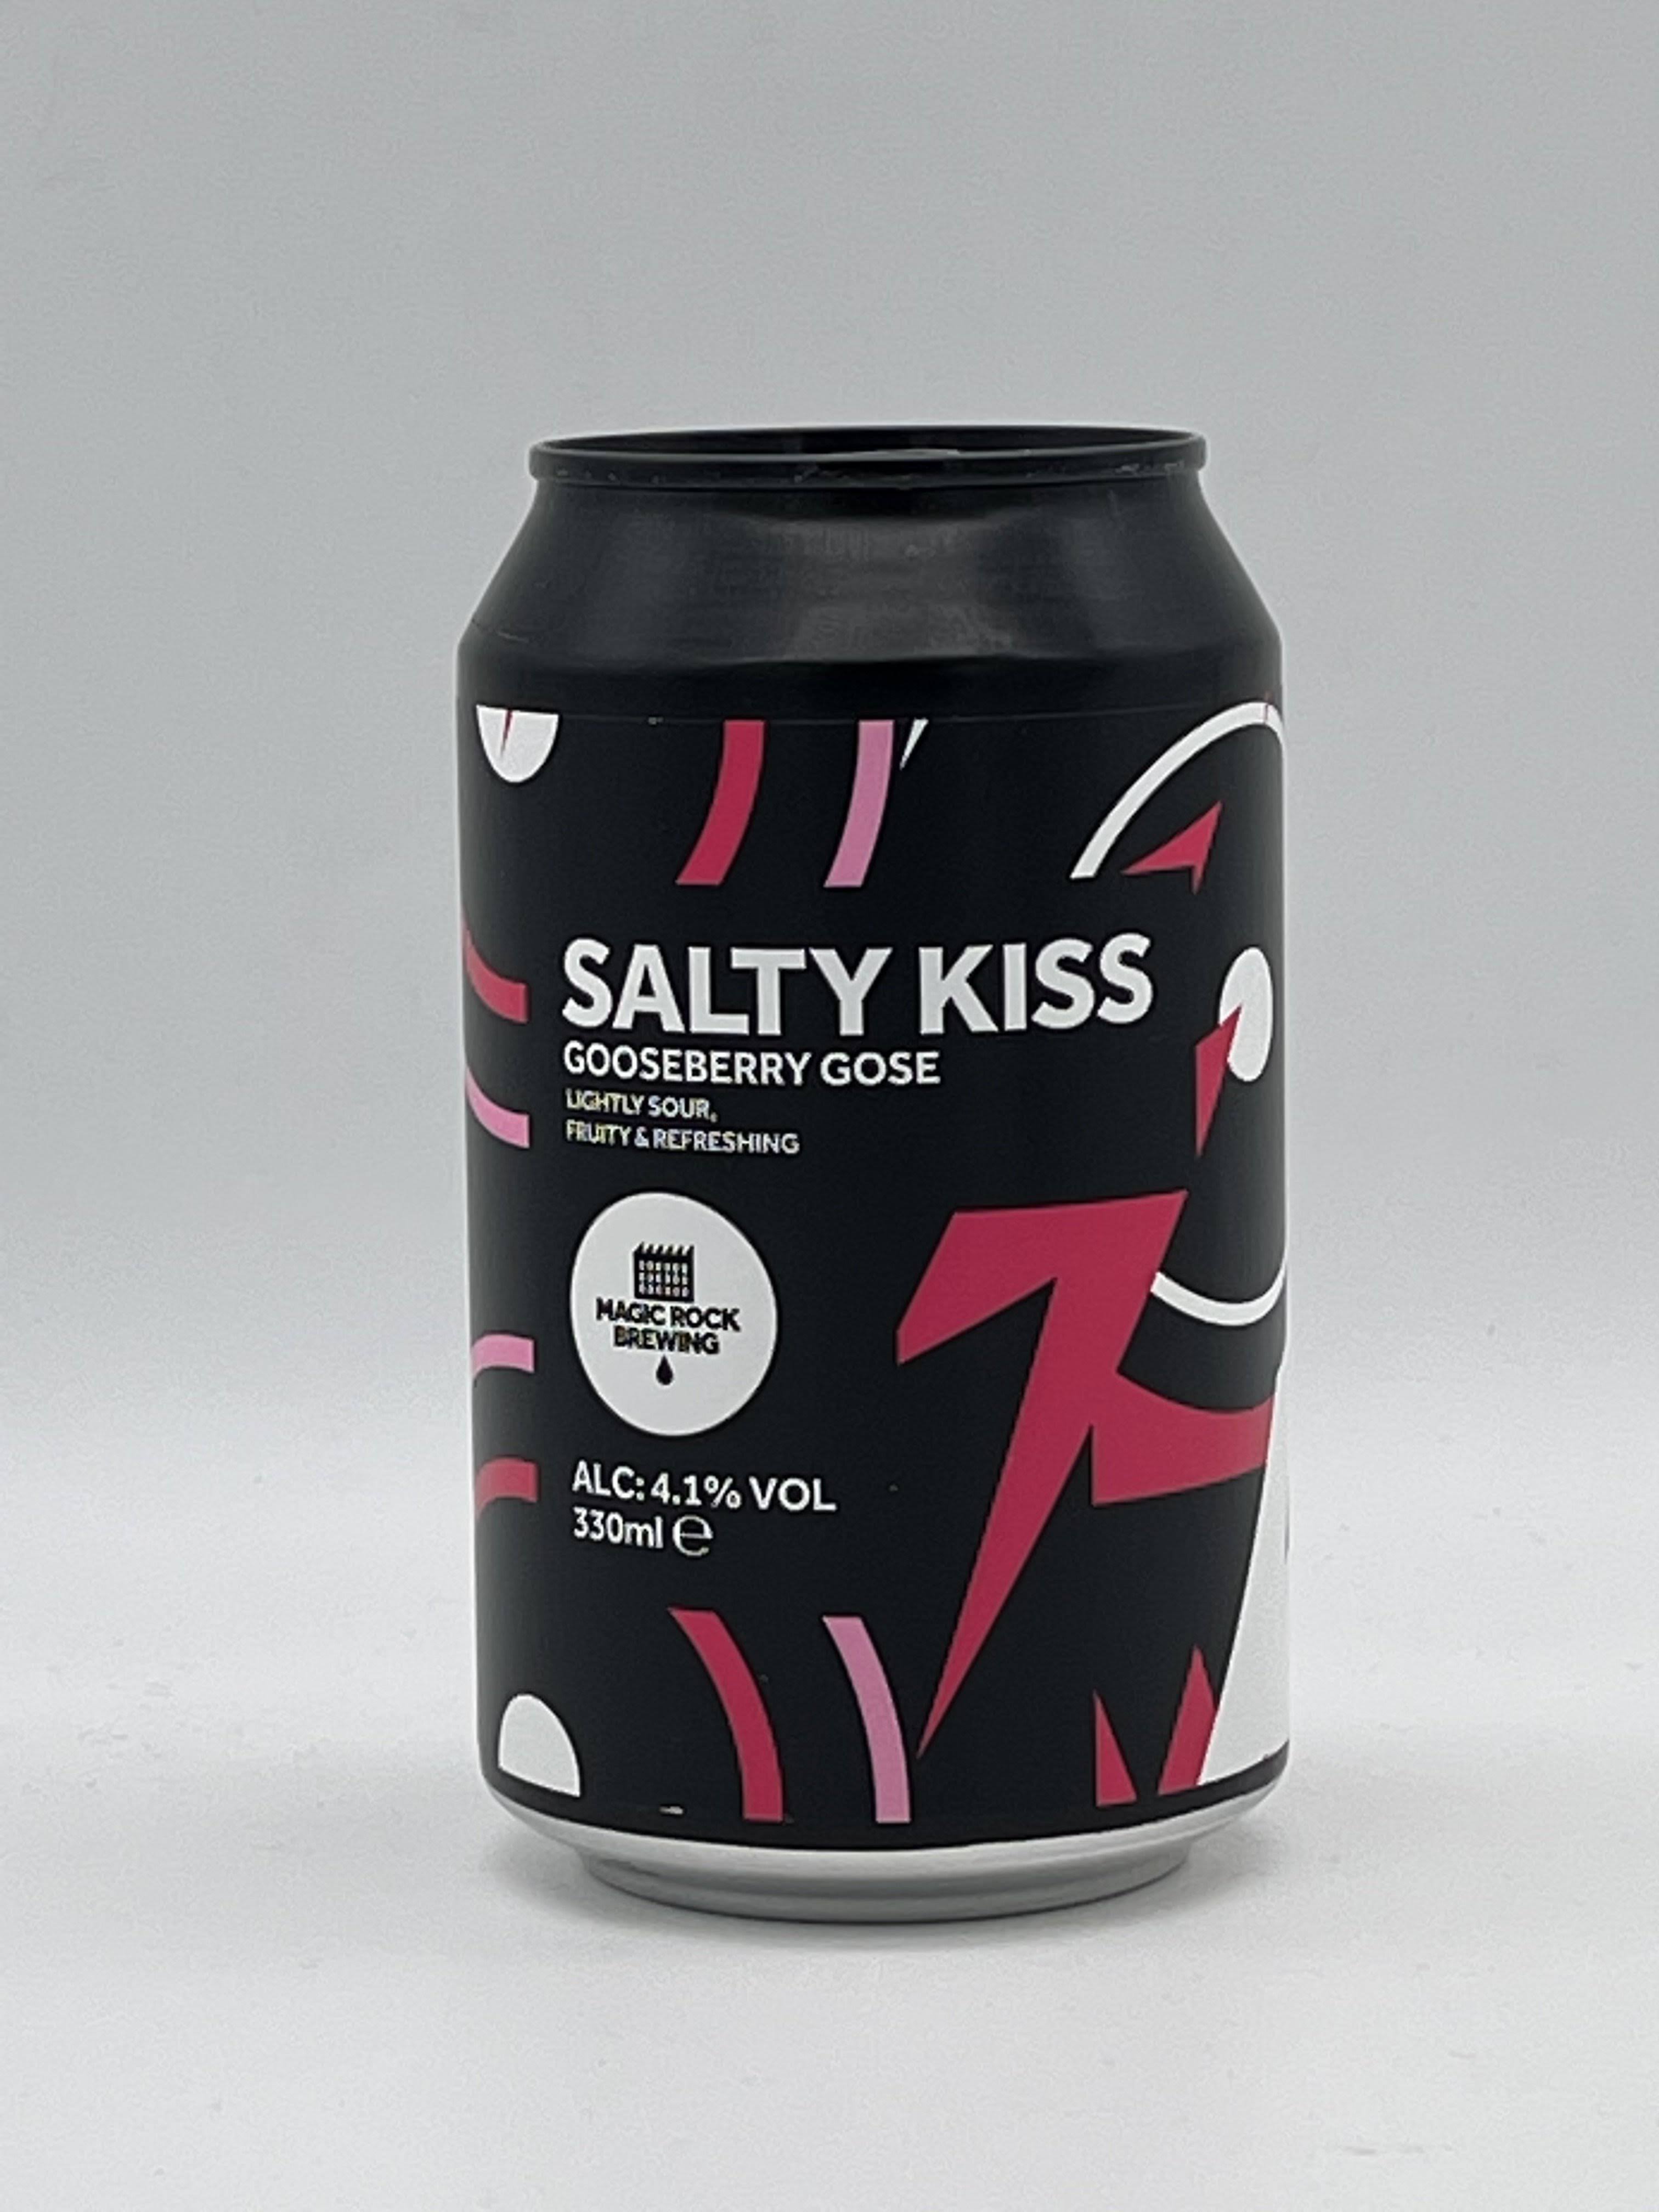 Magic Rock Salty Kiss Drink - Gooseberry Gose, 330ml